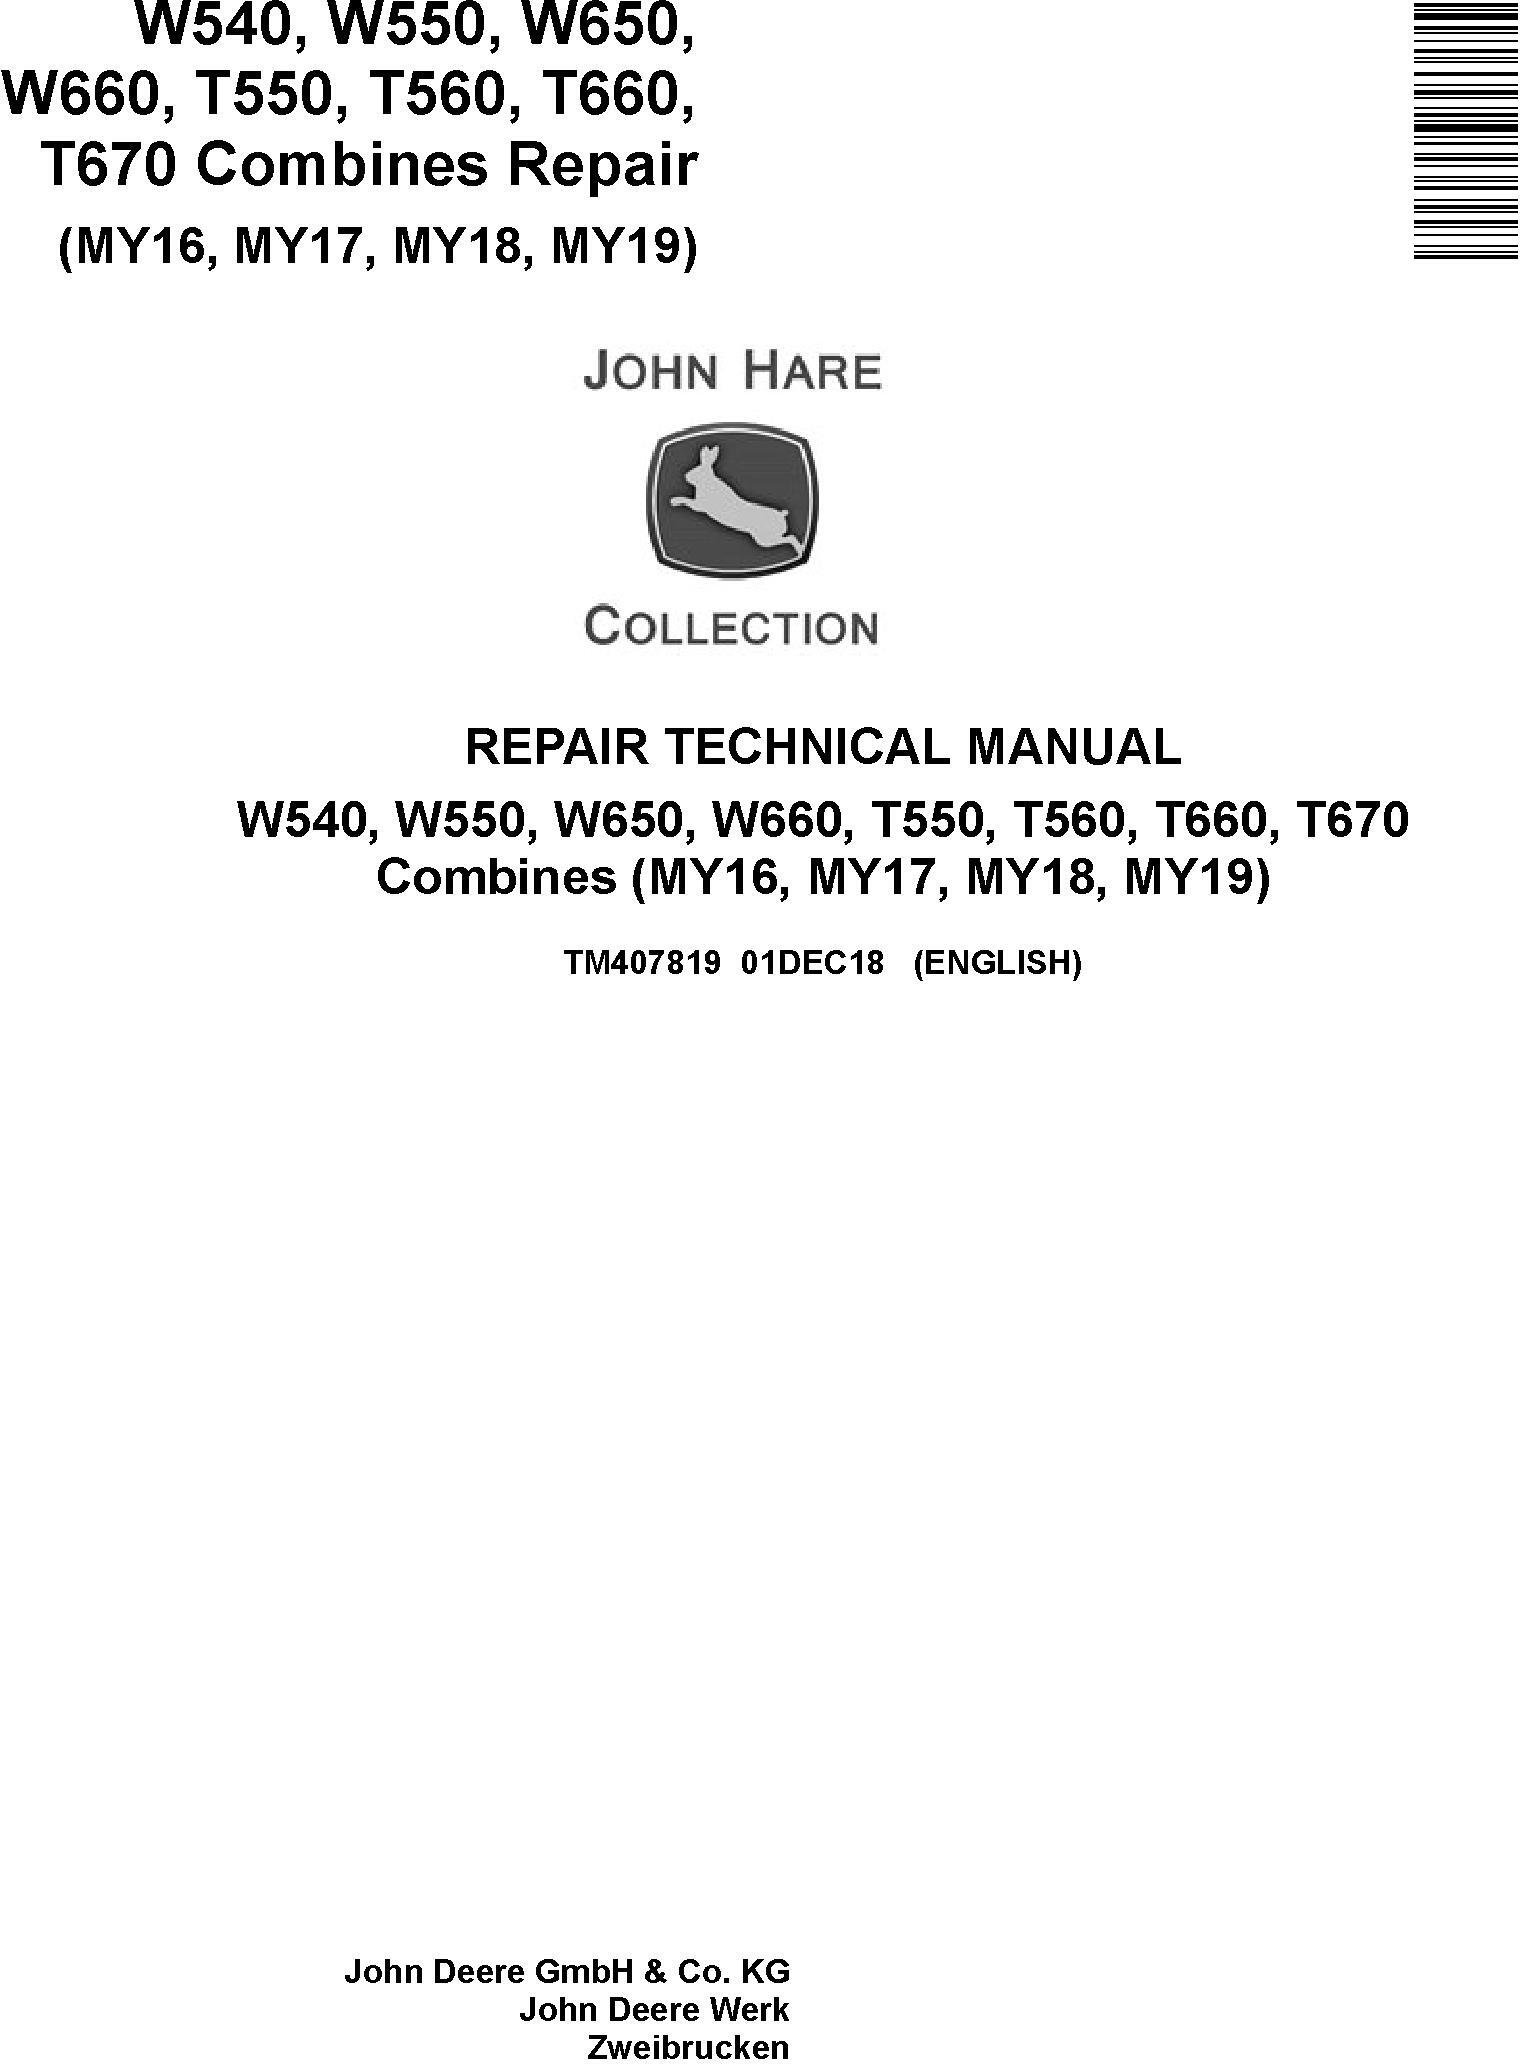 John Deere W540 to W660, T550 to T670 Combine Repair Technical Manual TM407819